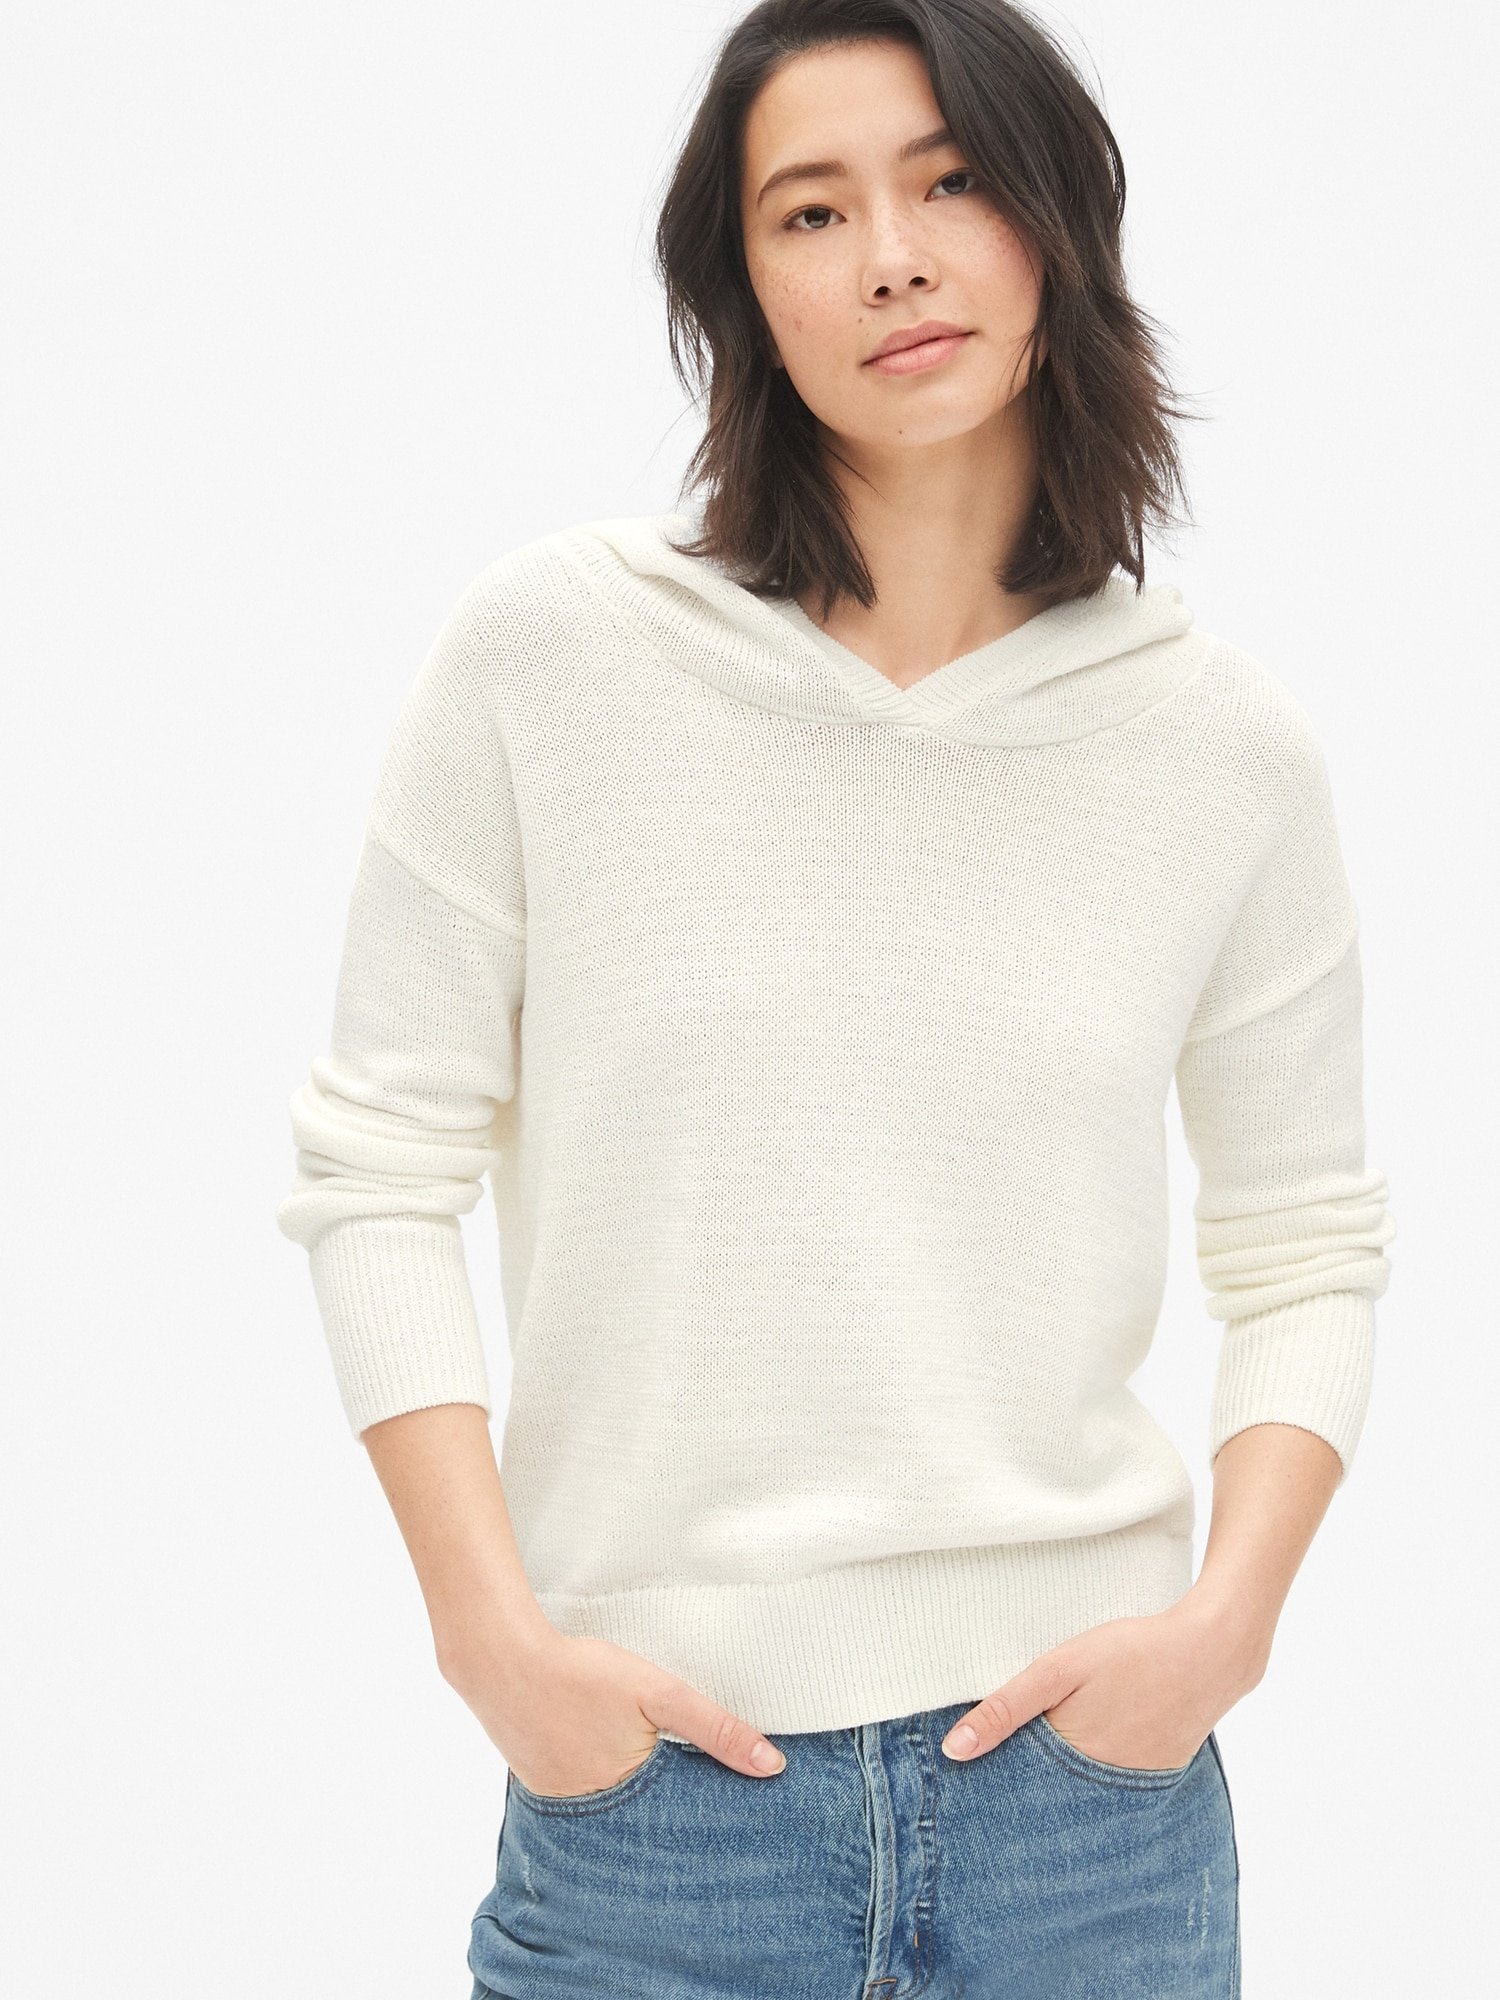 Kadın Kapüşonlu Sweatshirt product image